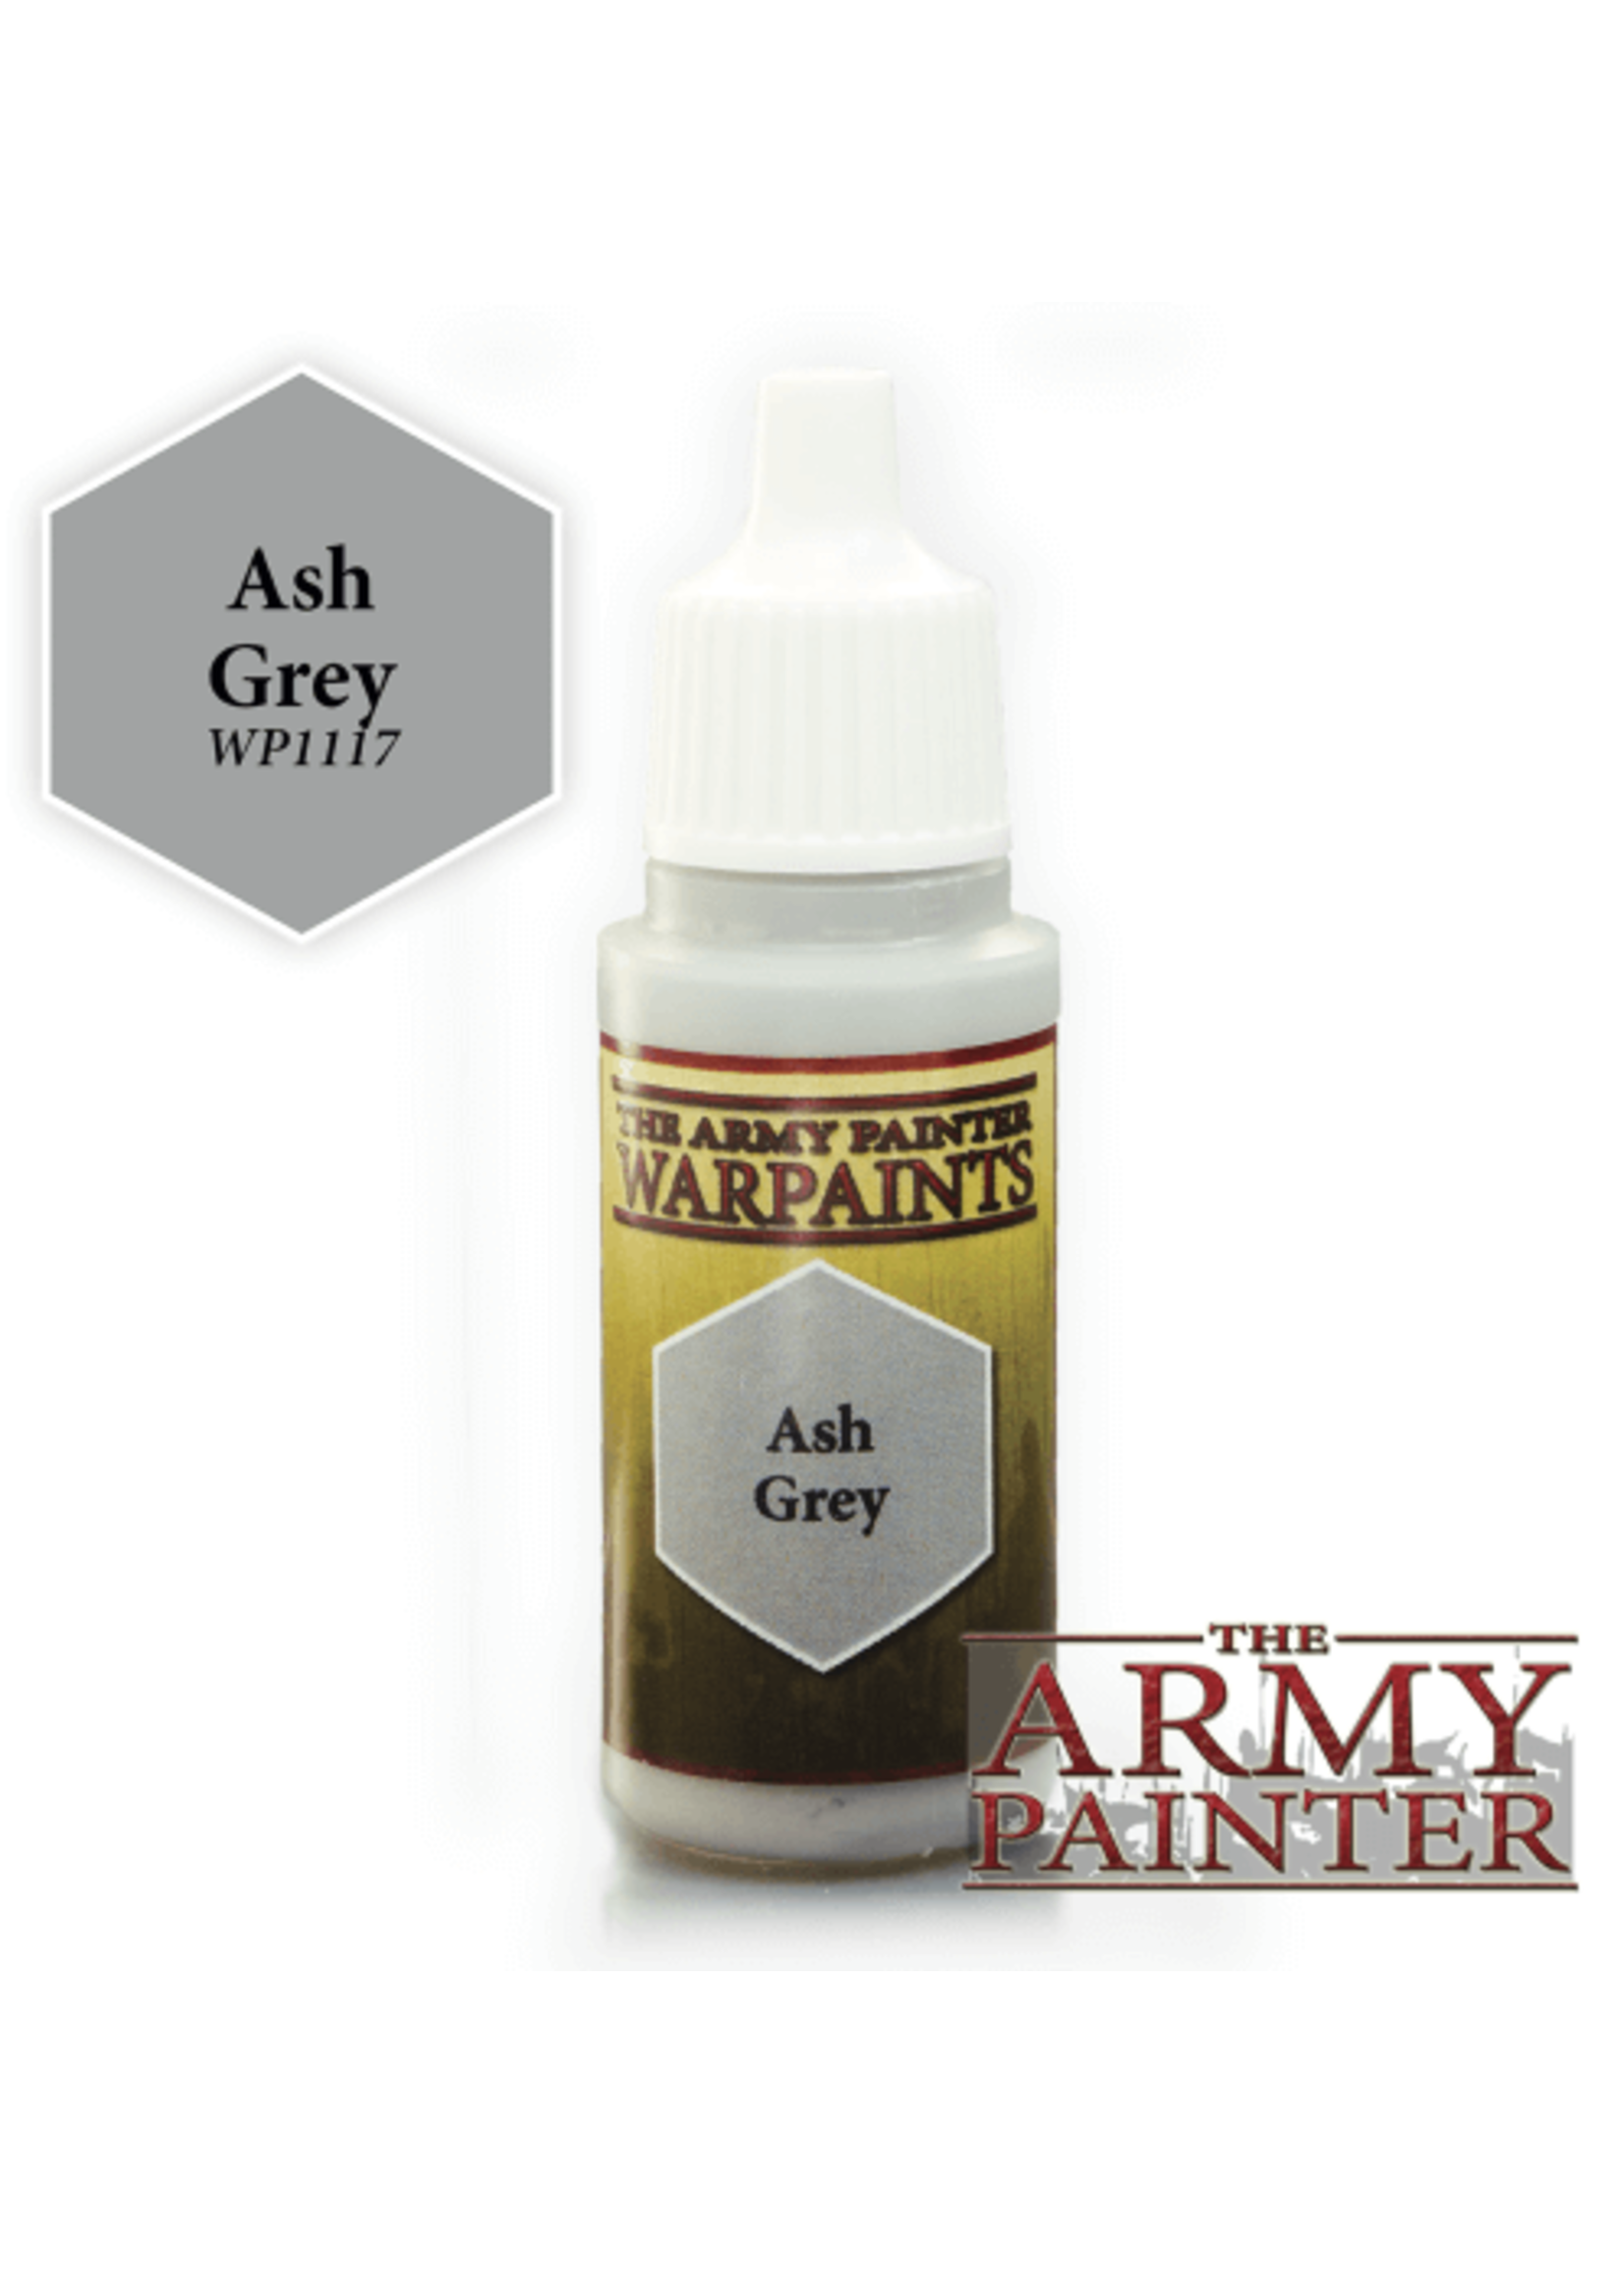 The Army Painter Acrylics Warpaints Ash Grey